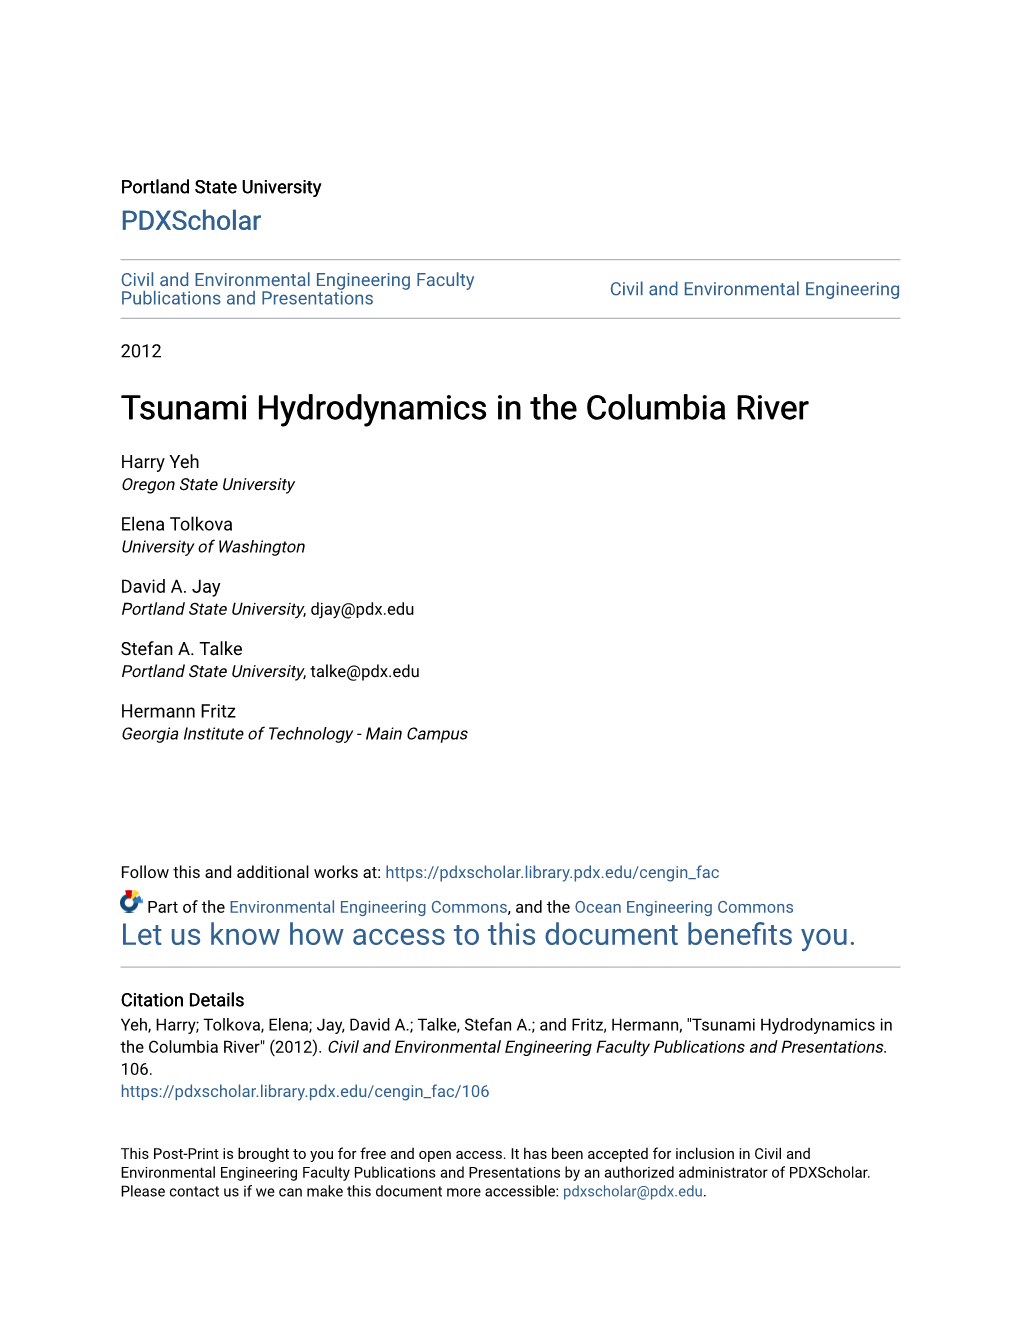 Tsunami Hydrodynamics in the Columbia River